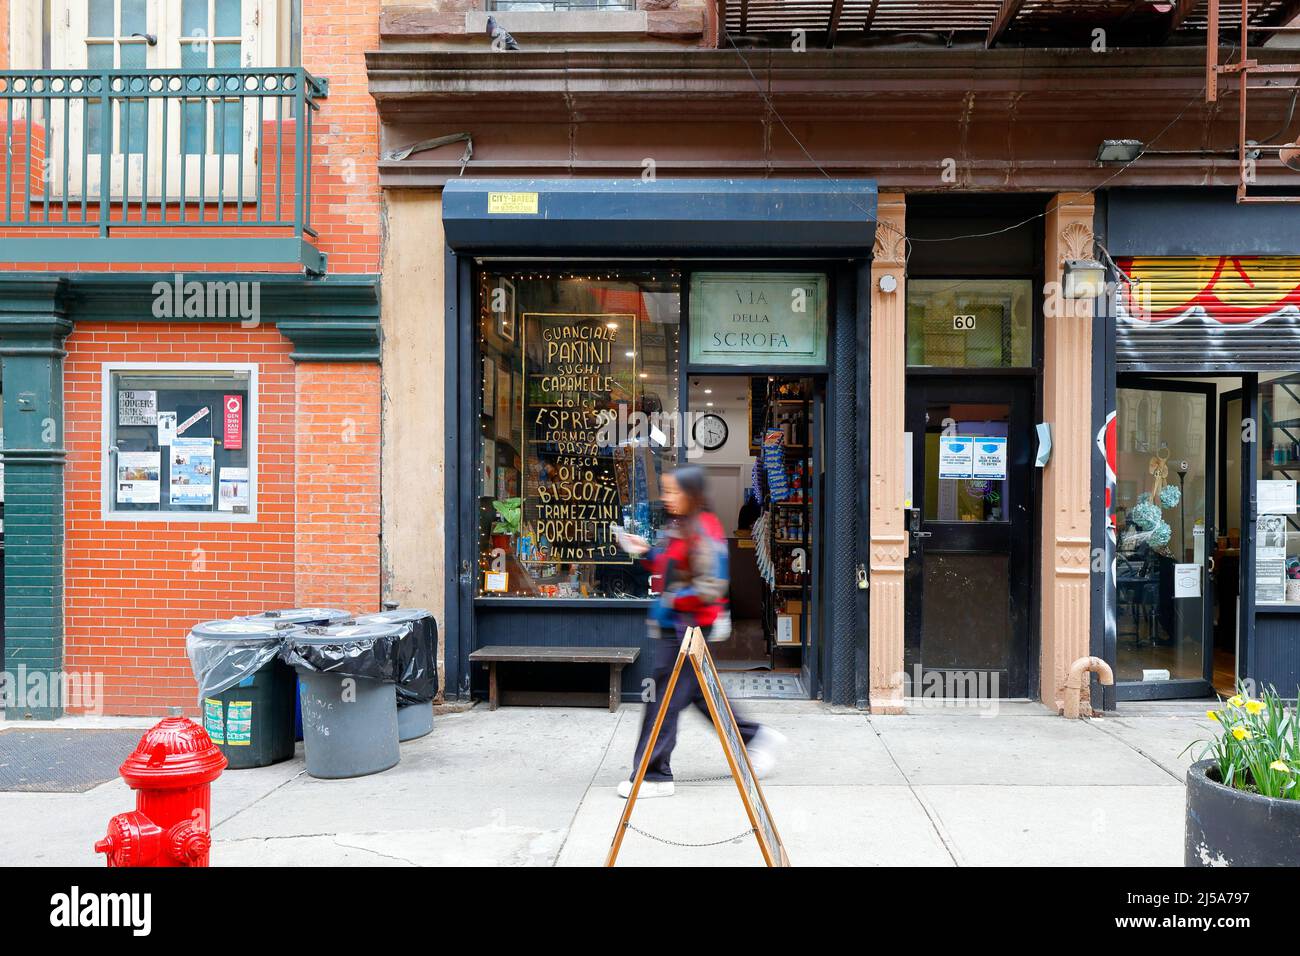 Via Della Scrofa, 60 E 4th St, New York, NYC storefront photo of an Italian grocery, alimentari, sandwich shop in Manhattan's East Village. Stock Photo